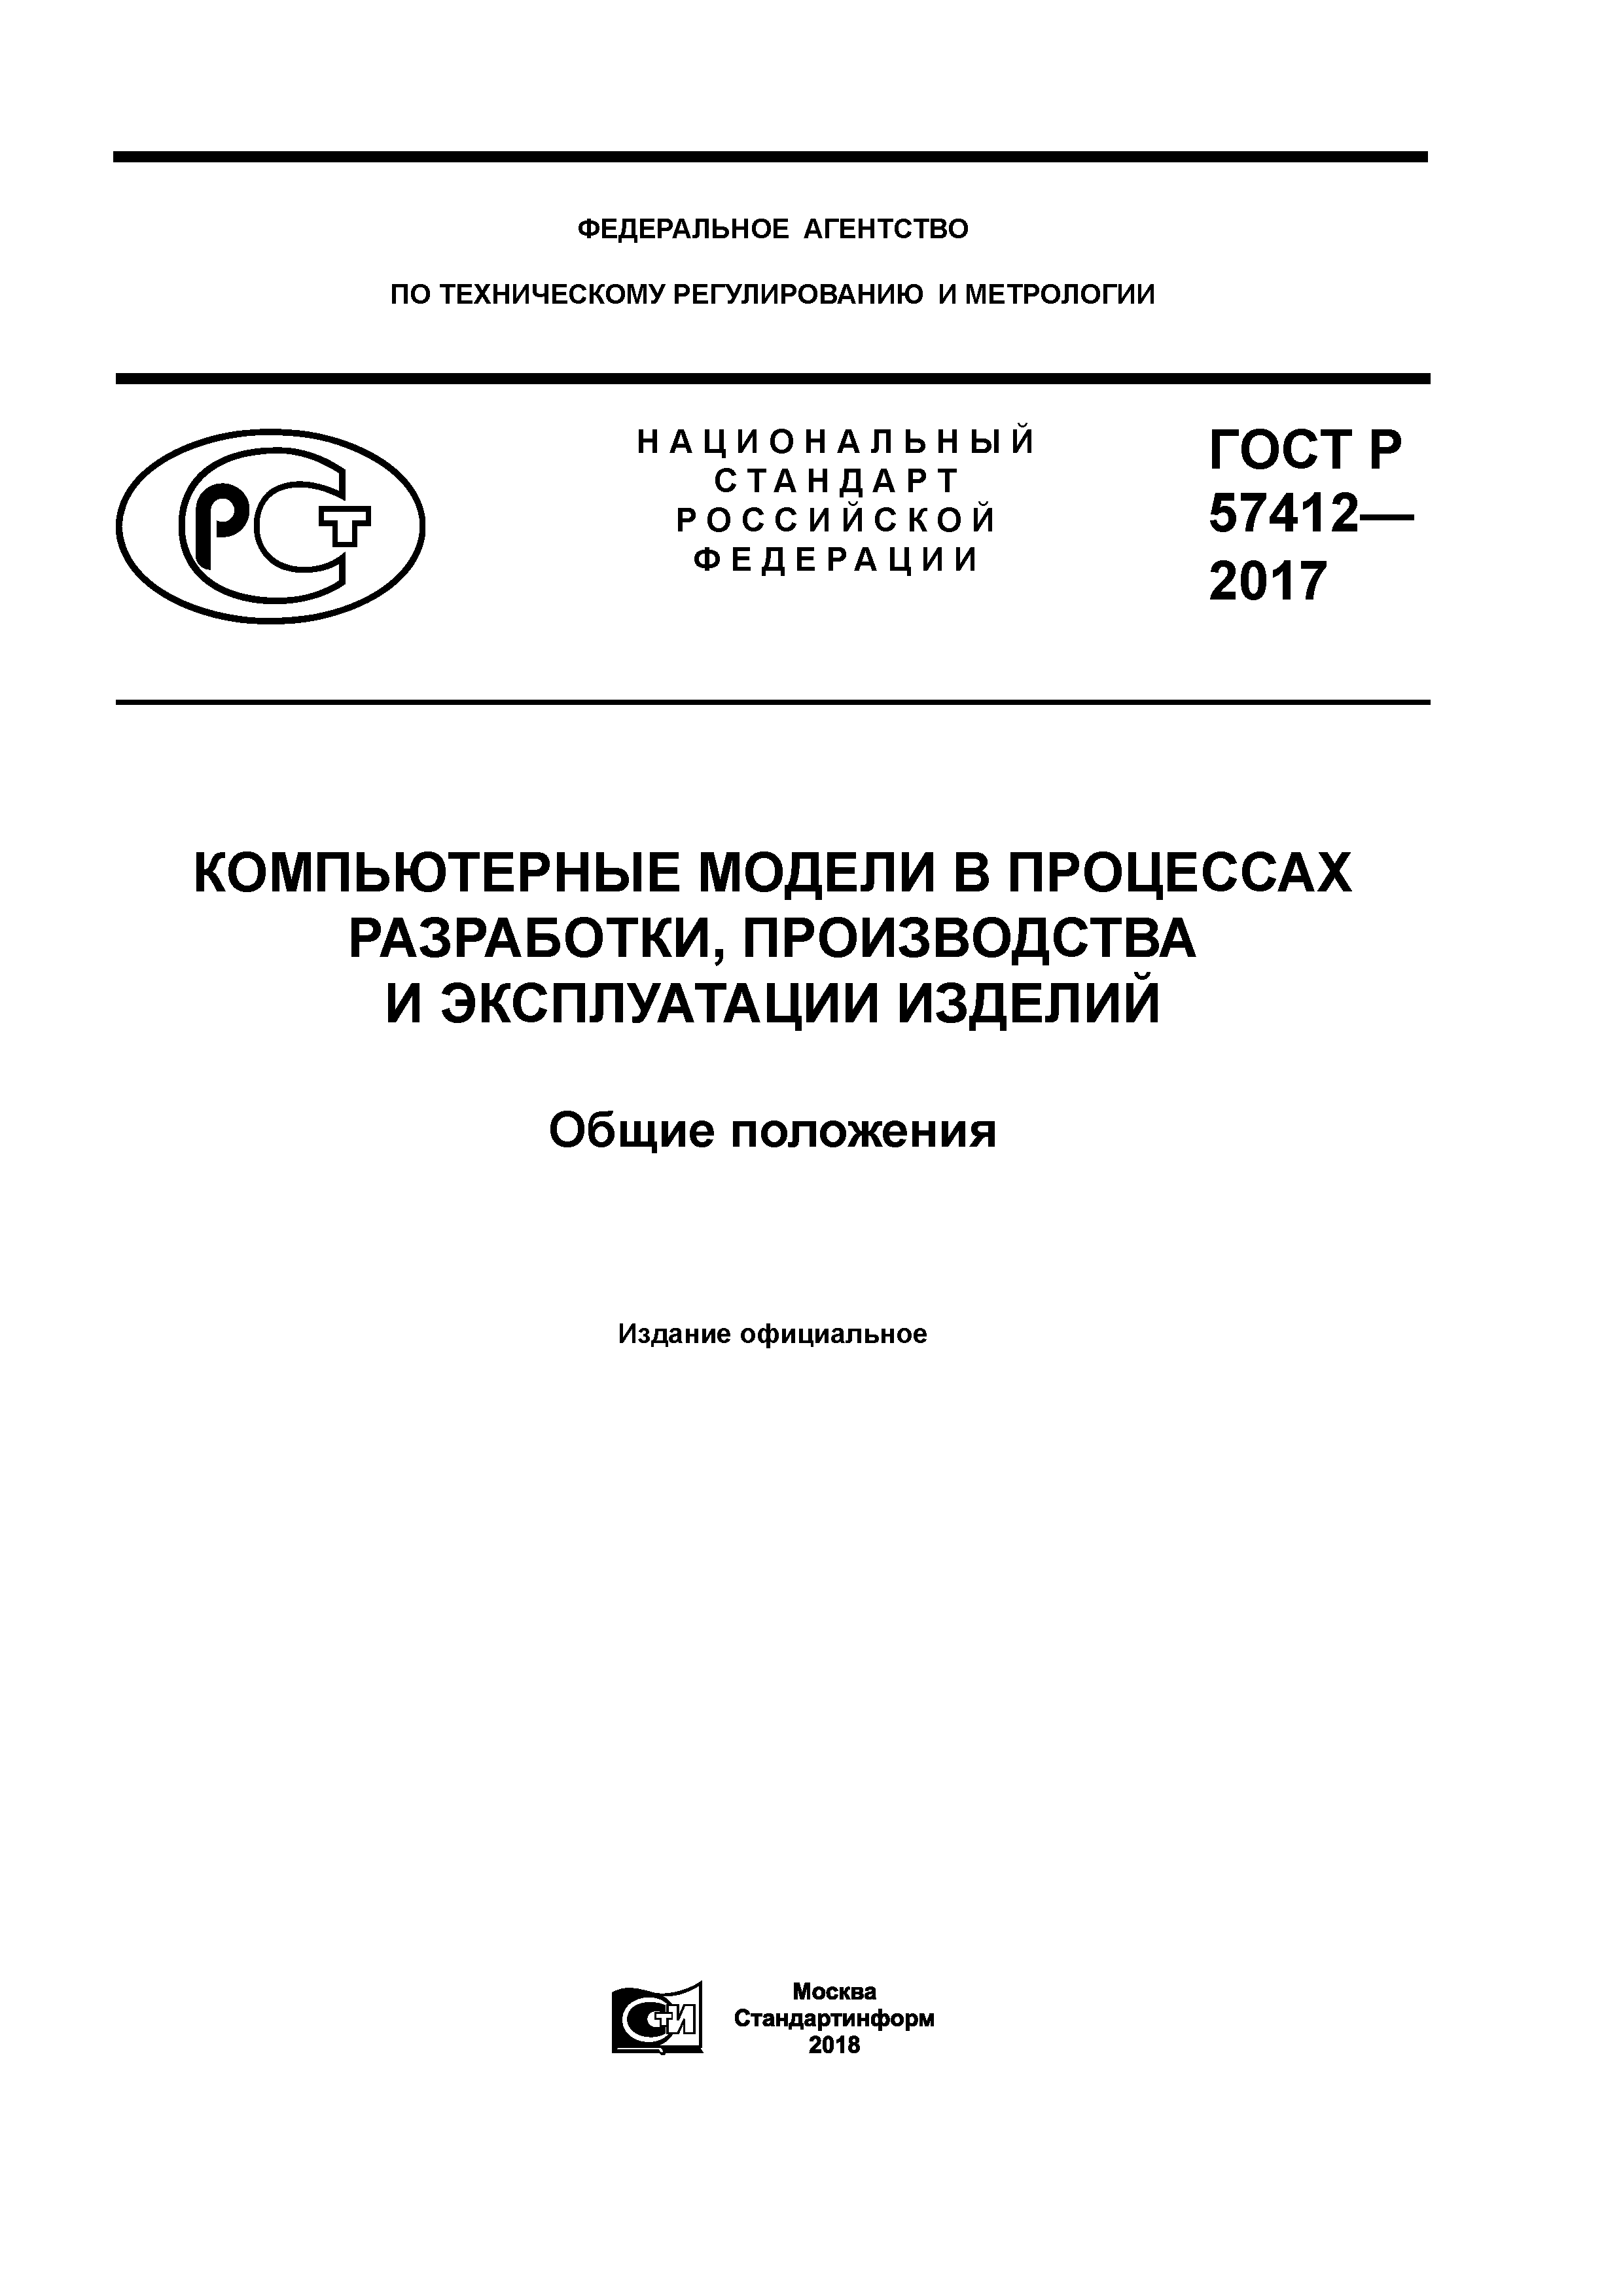 ГОСТ Р 57412-2017